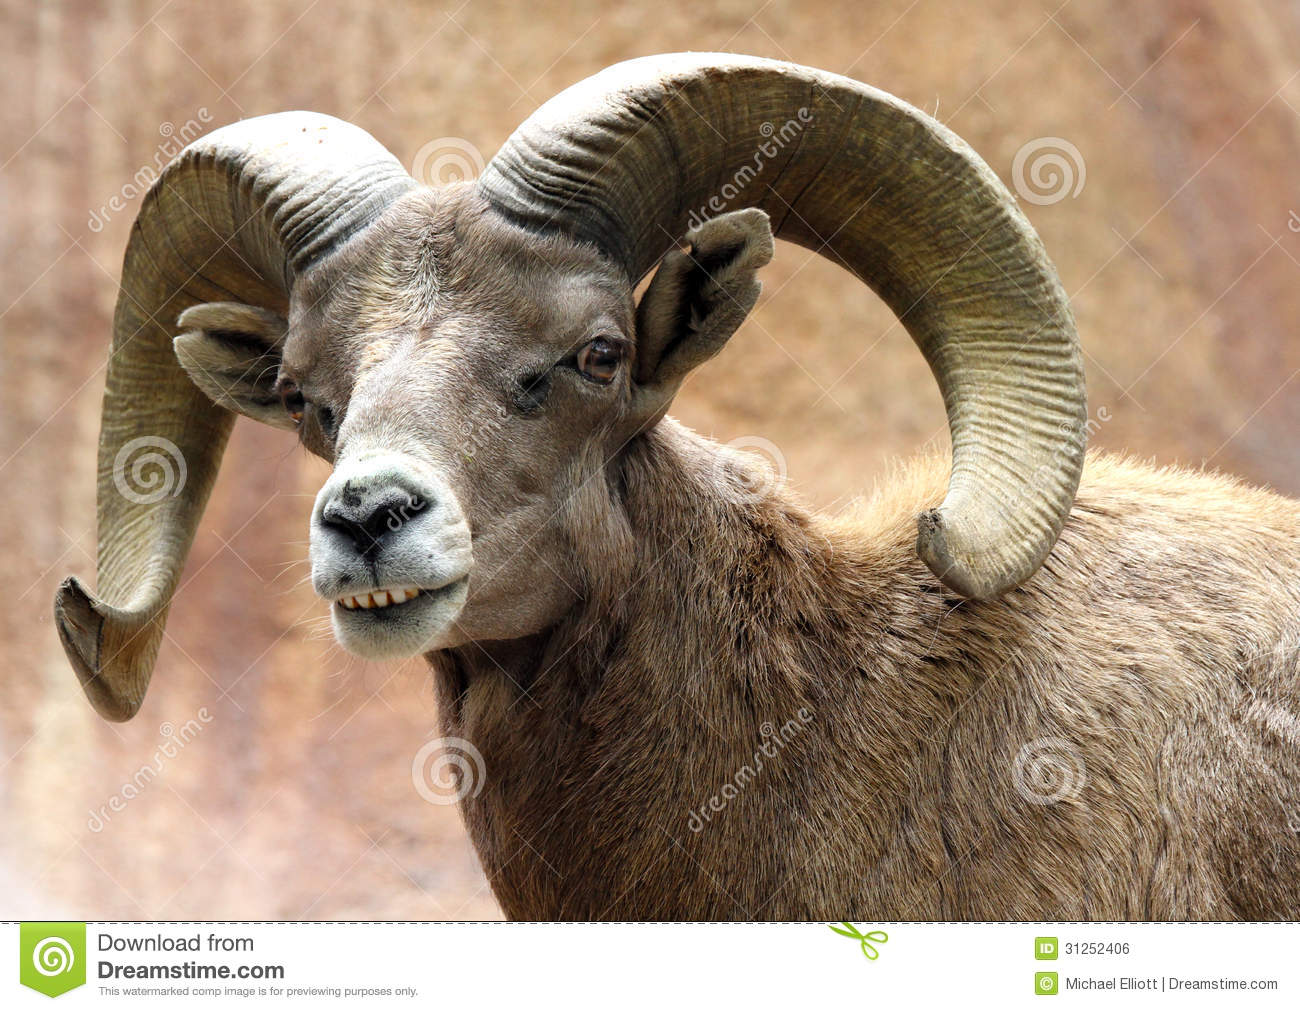 Male Desert Bighorn Sheep Displaying Huge Curved Horns And Teeth 